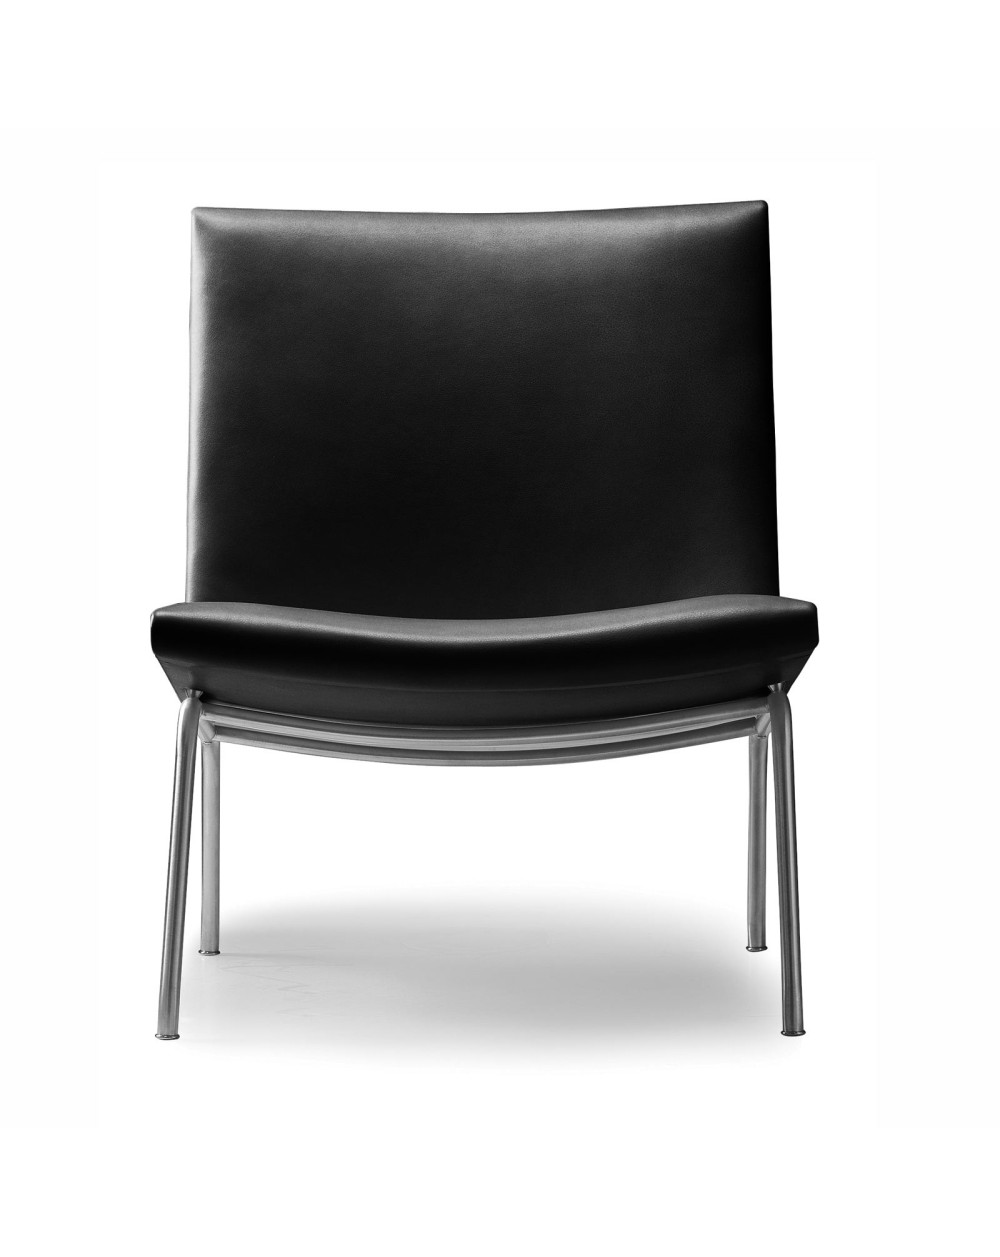 Chair CH401, design Hans Wegner